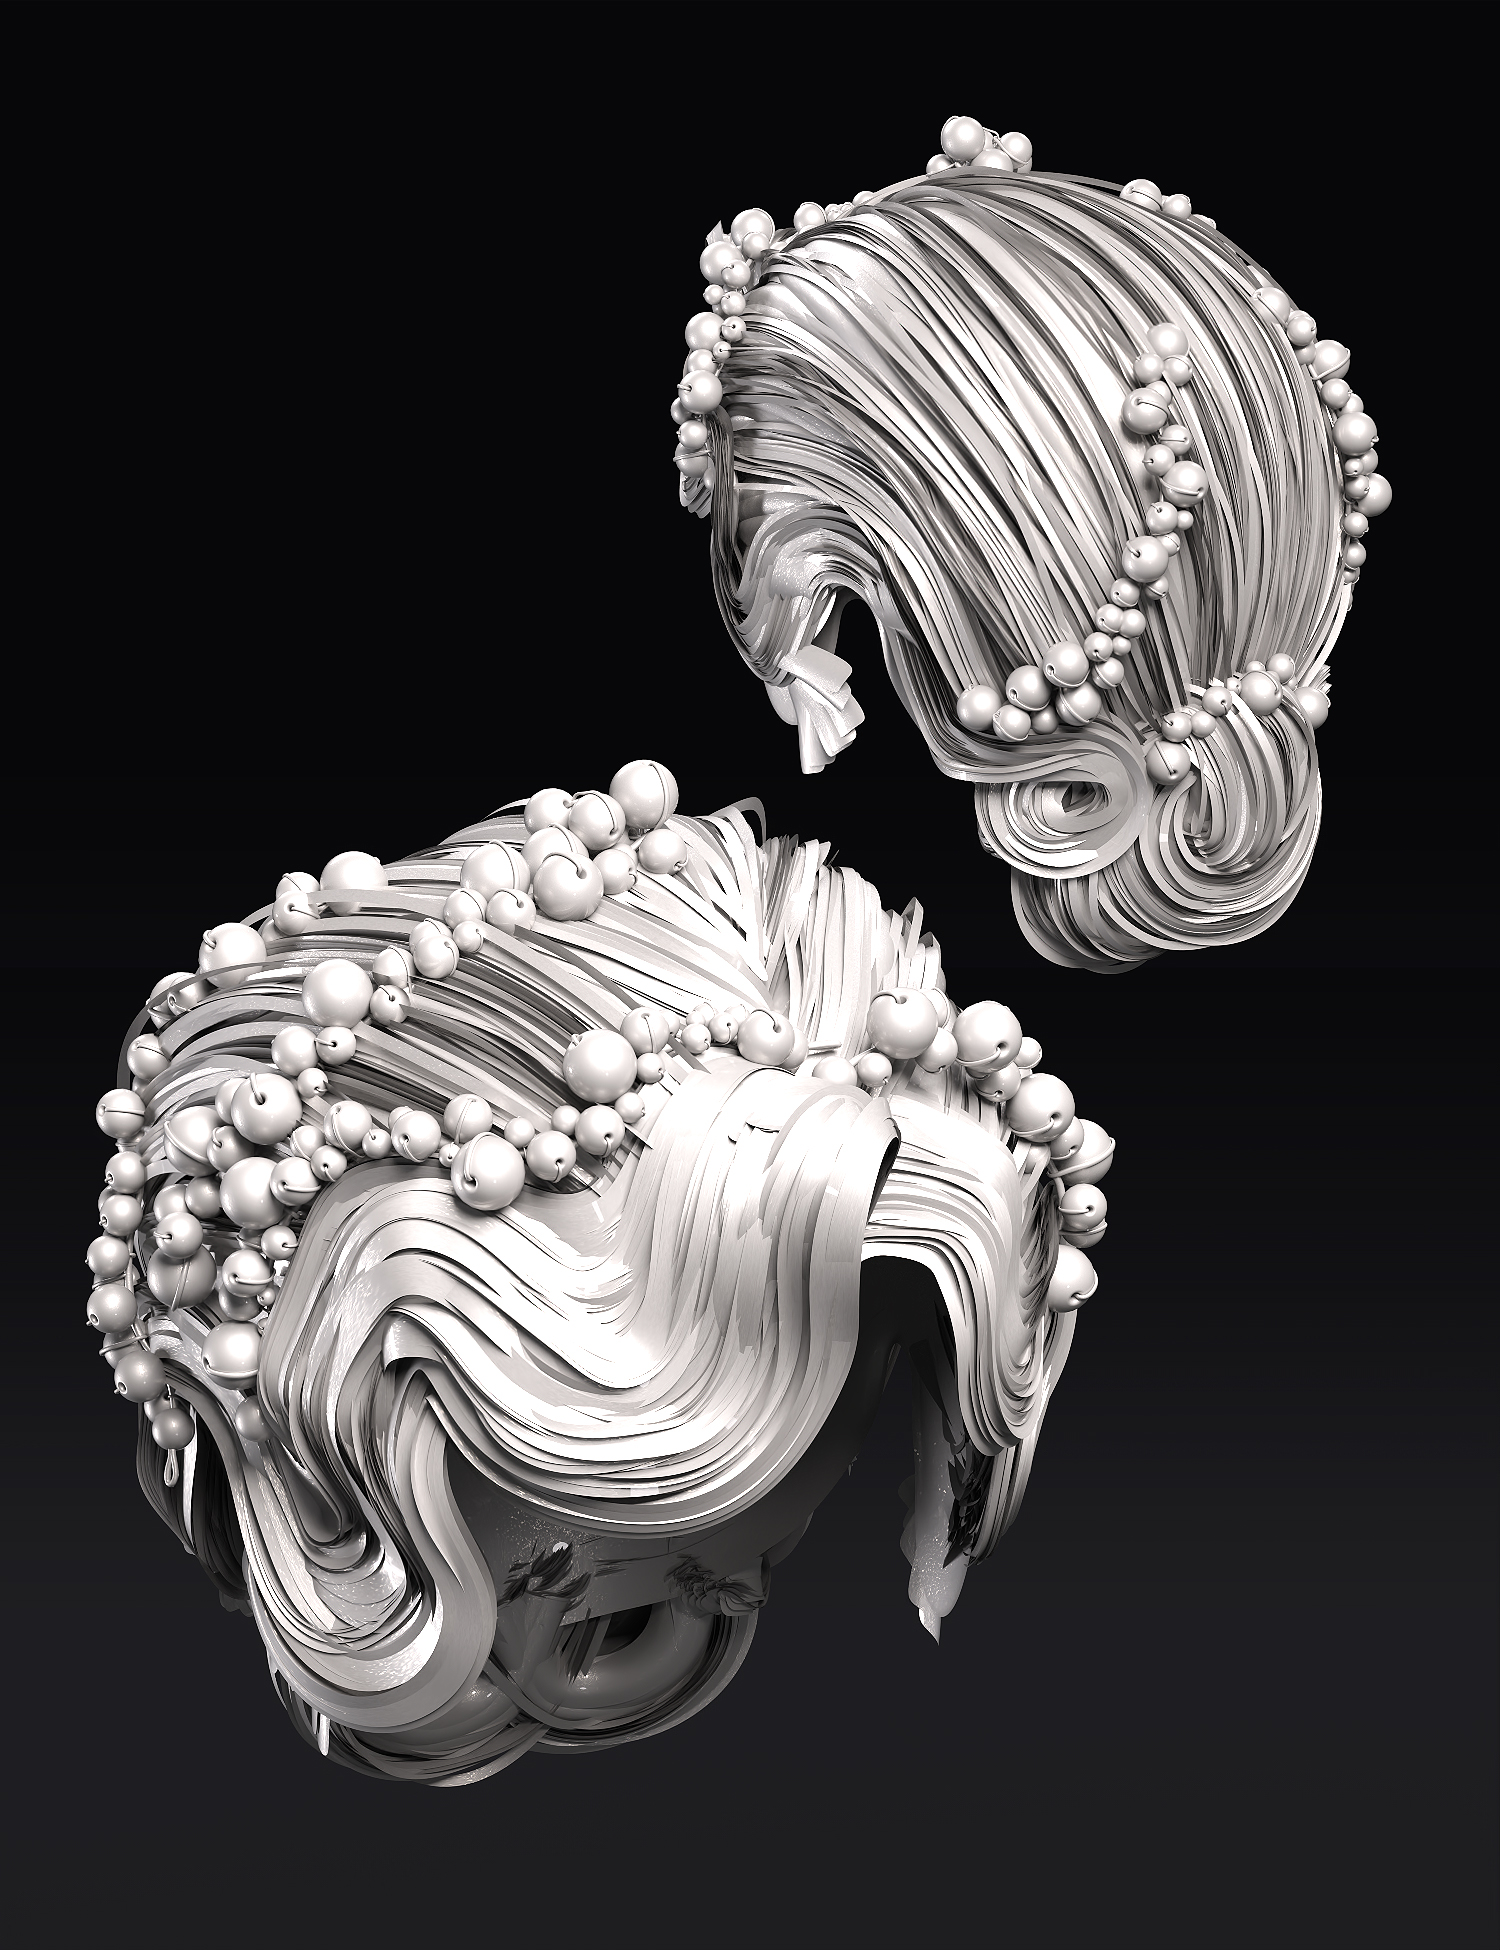 Qun Hair for Genesis 8.1 Females by: Ergou, 3D Models by Daz 3D